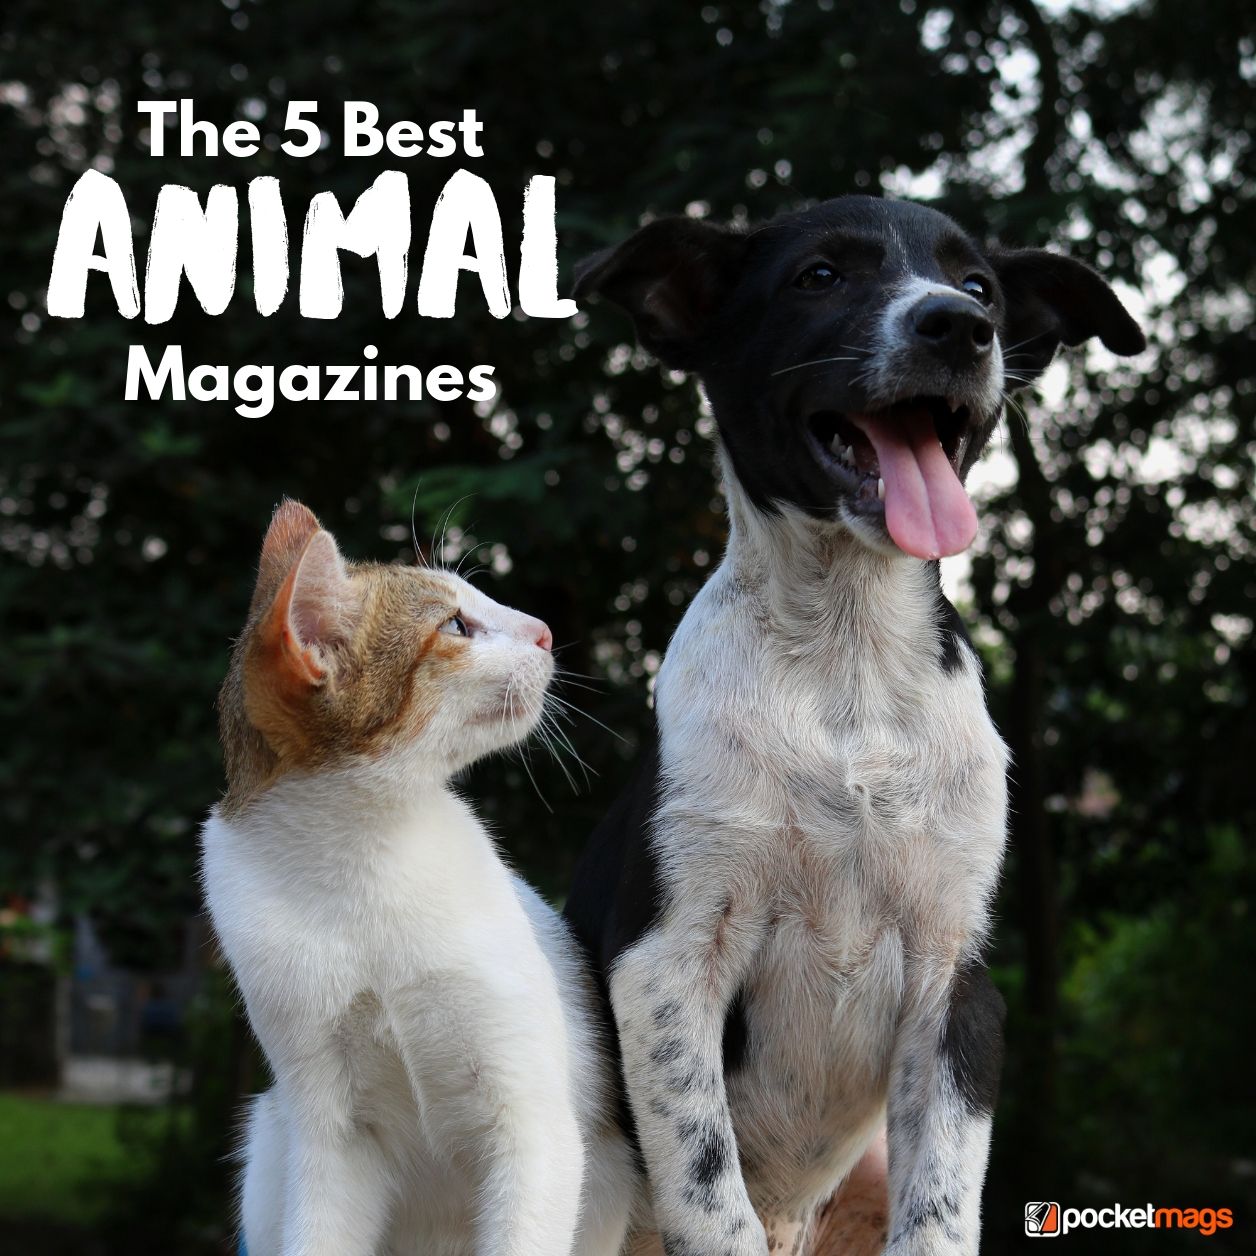 The 5 Best Animal Magazines